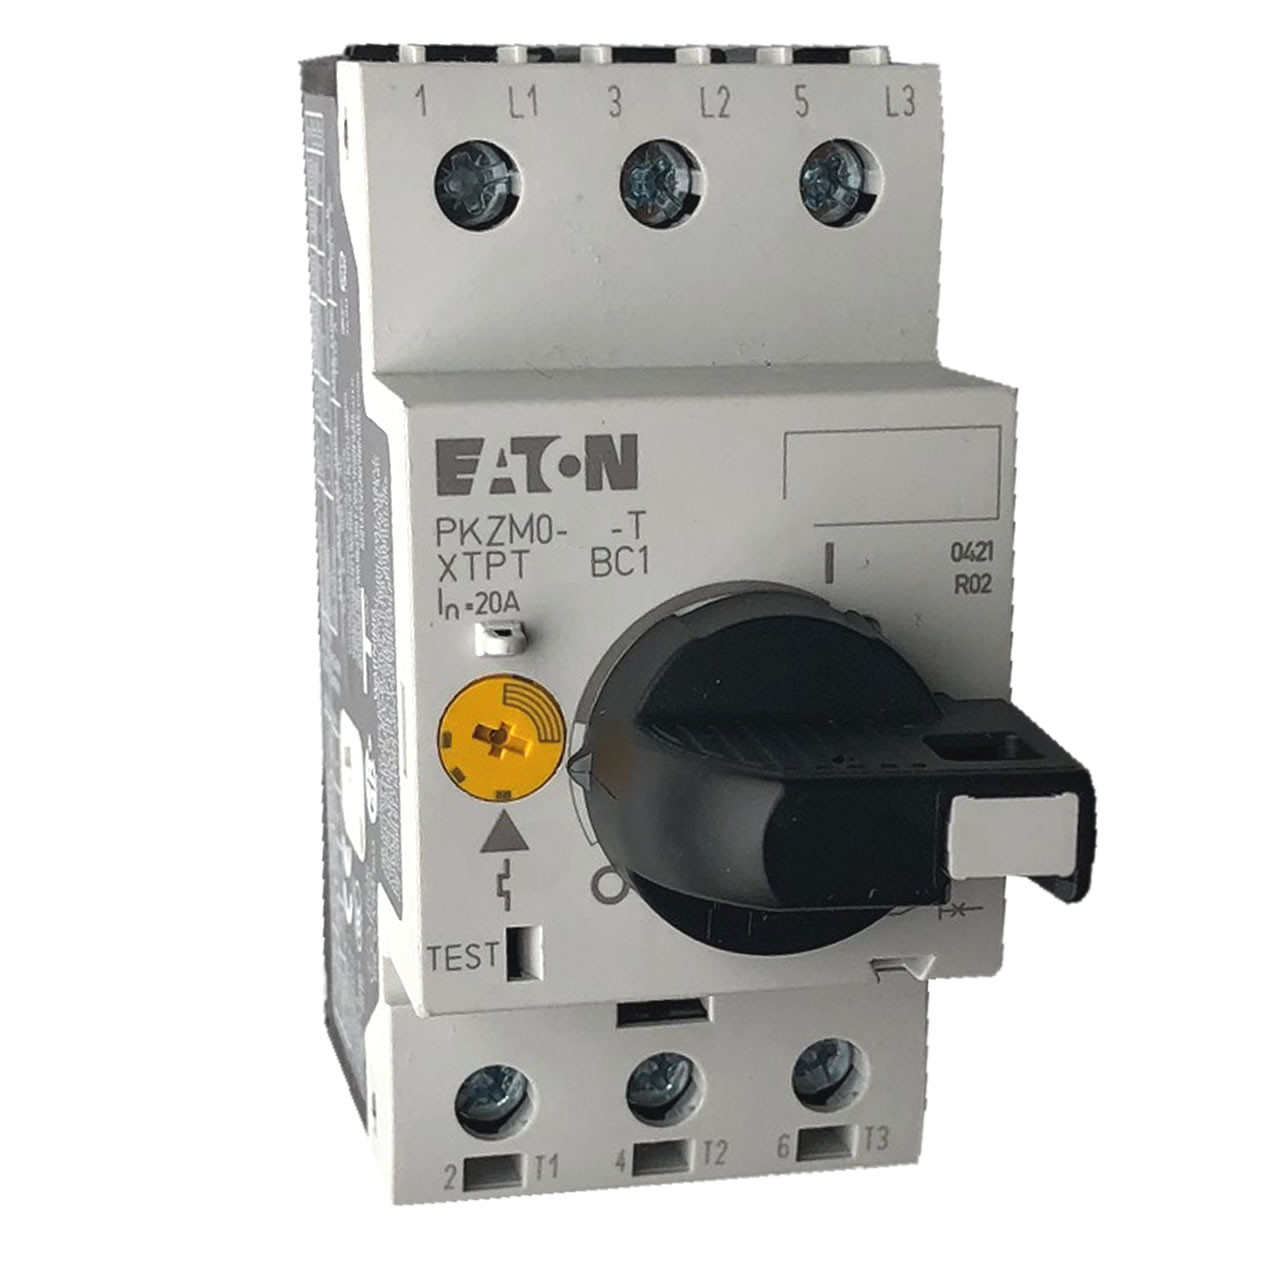 Eaton XTPT012BC1 motor protector